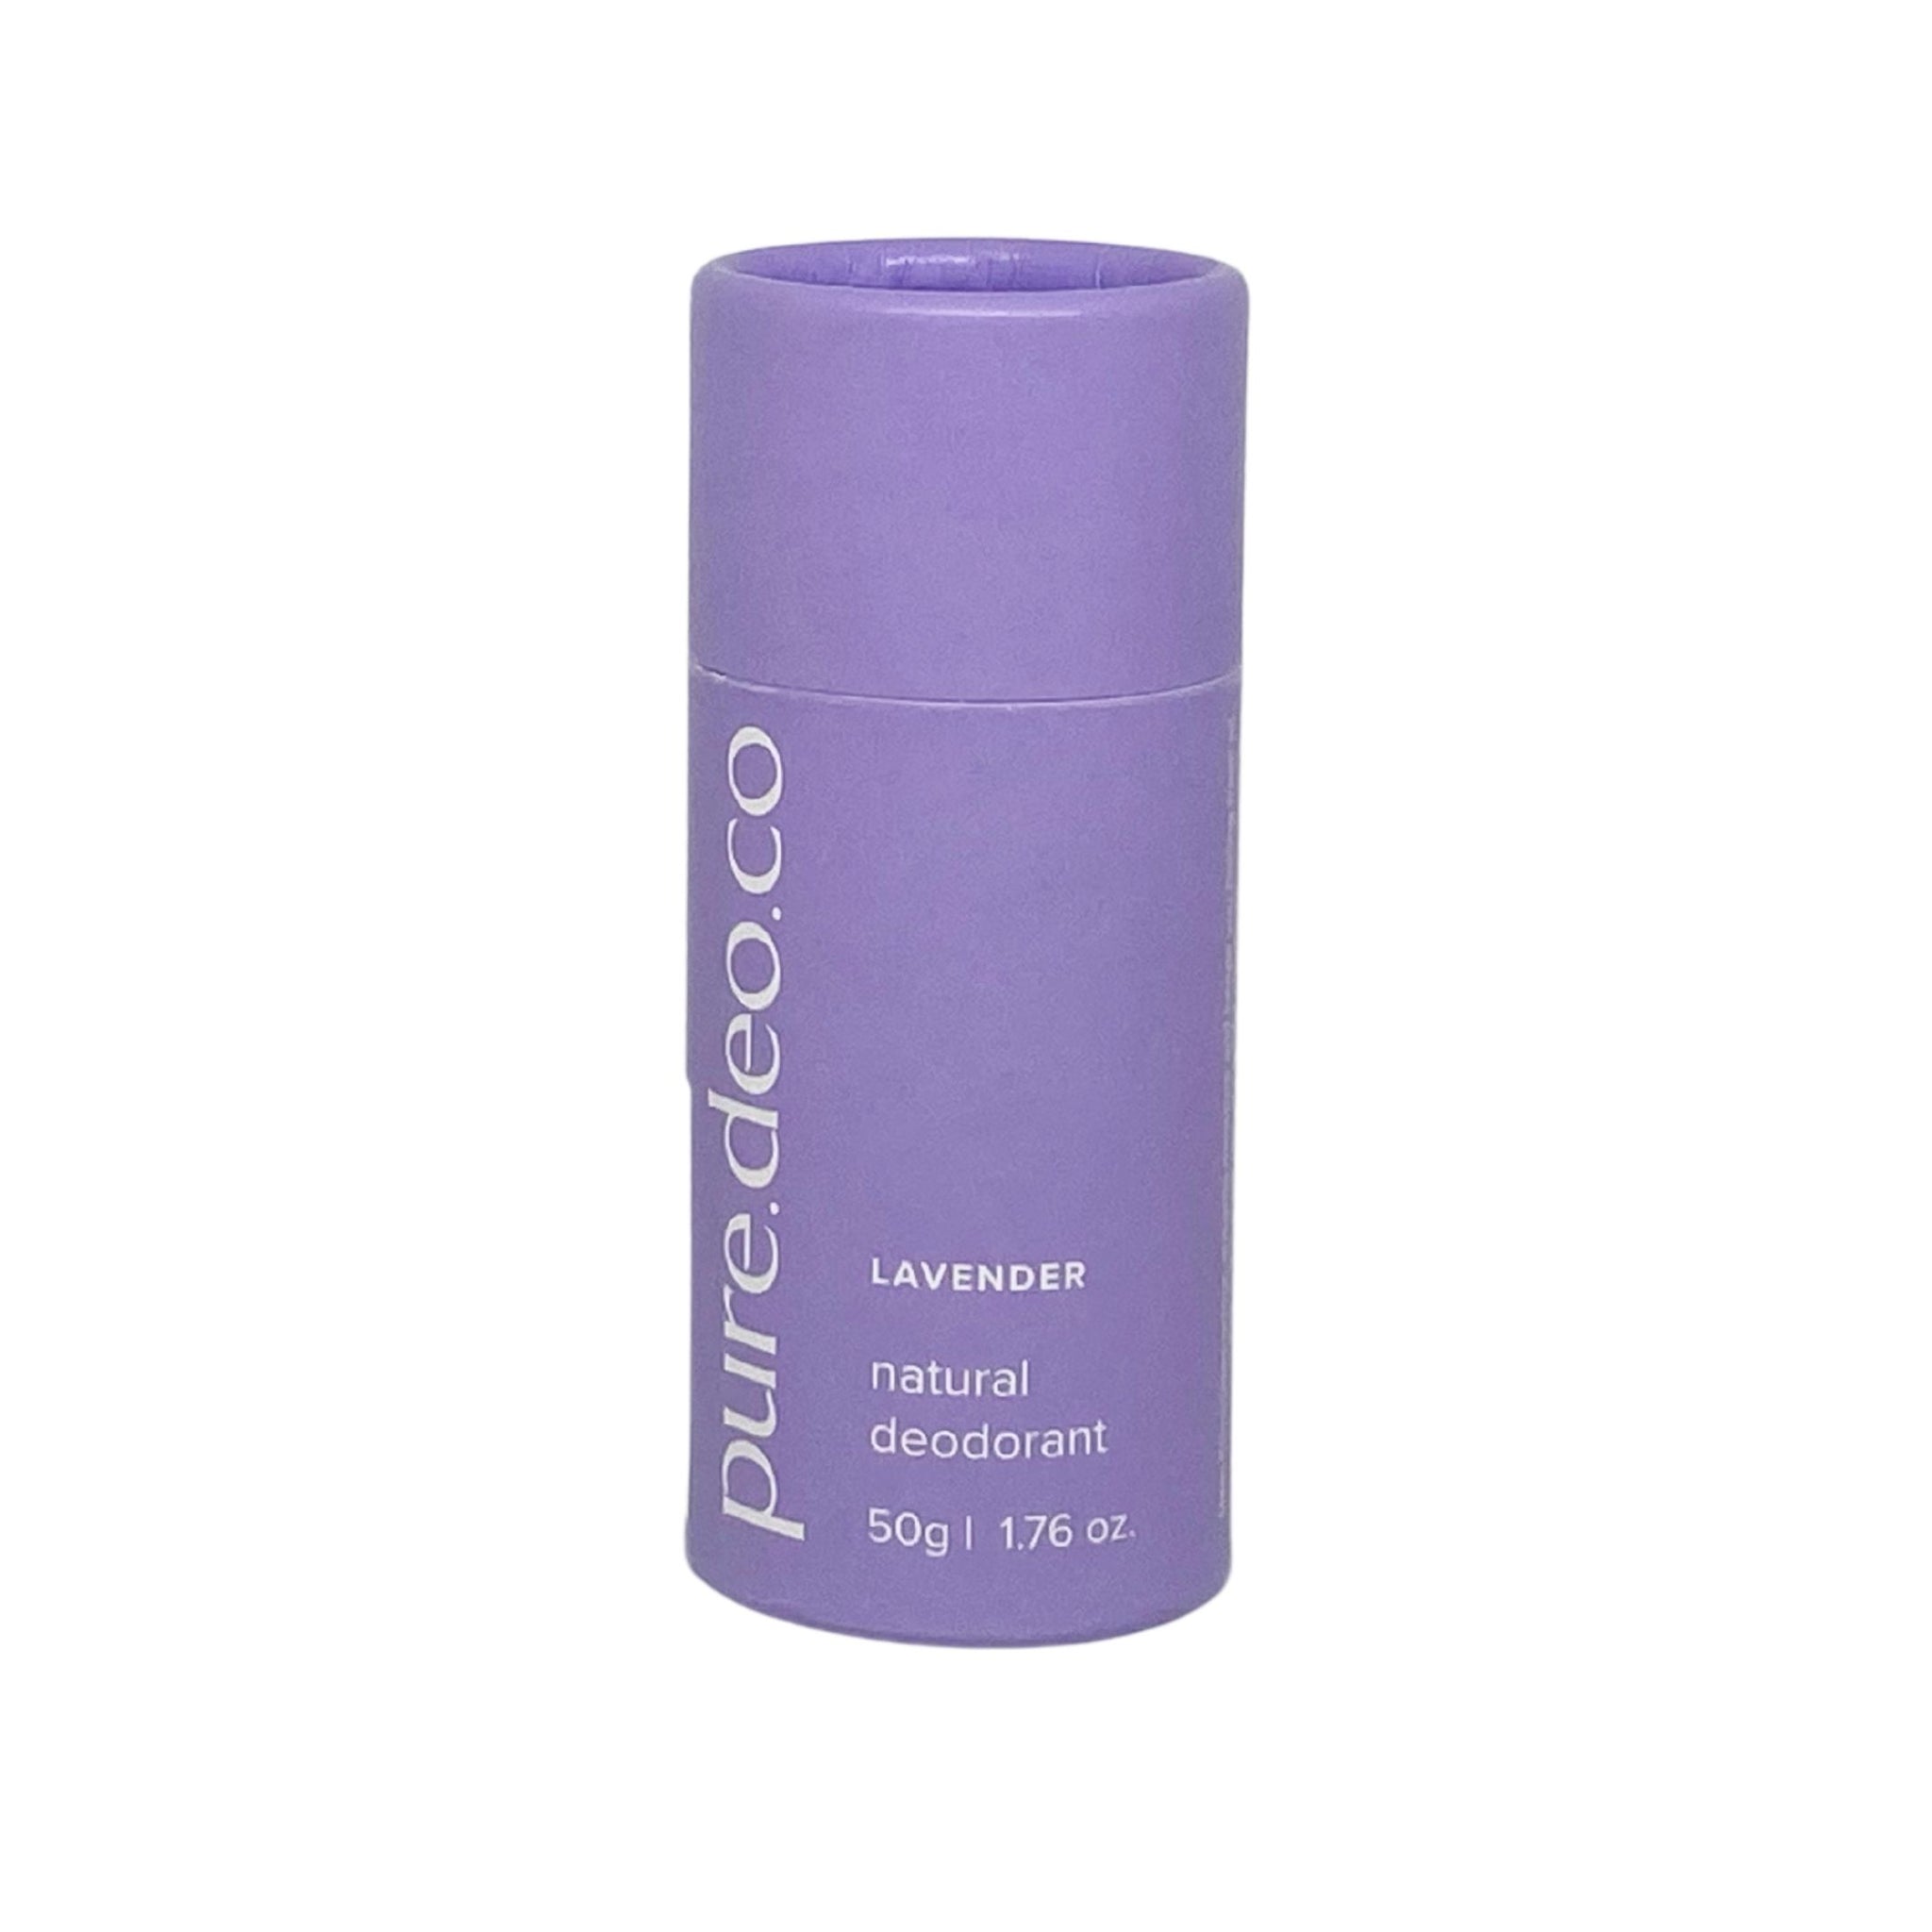 Natural Deodorant - Lavender - Original Formula